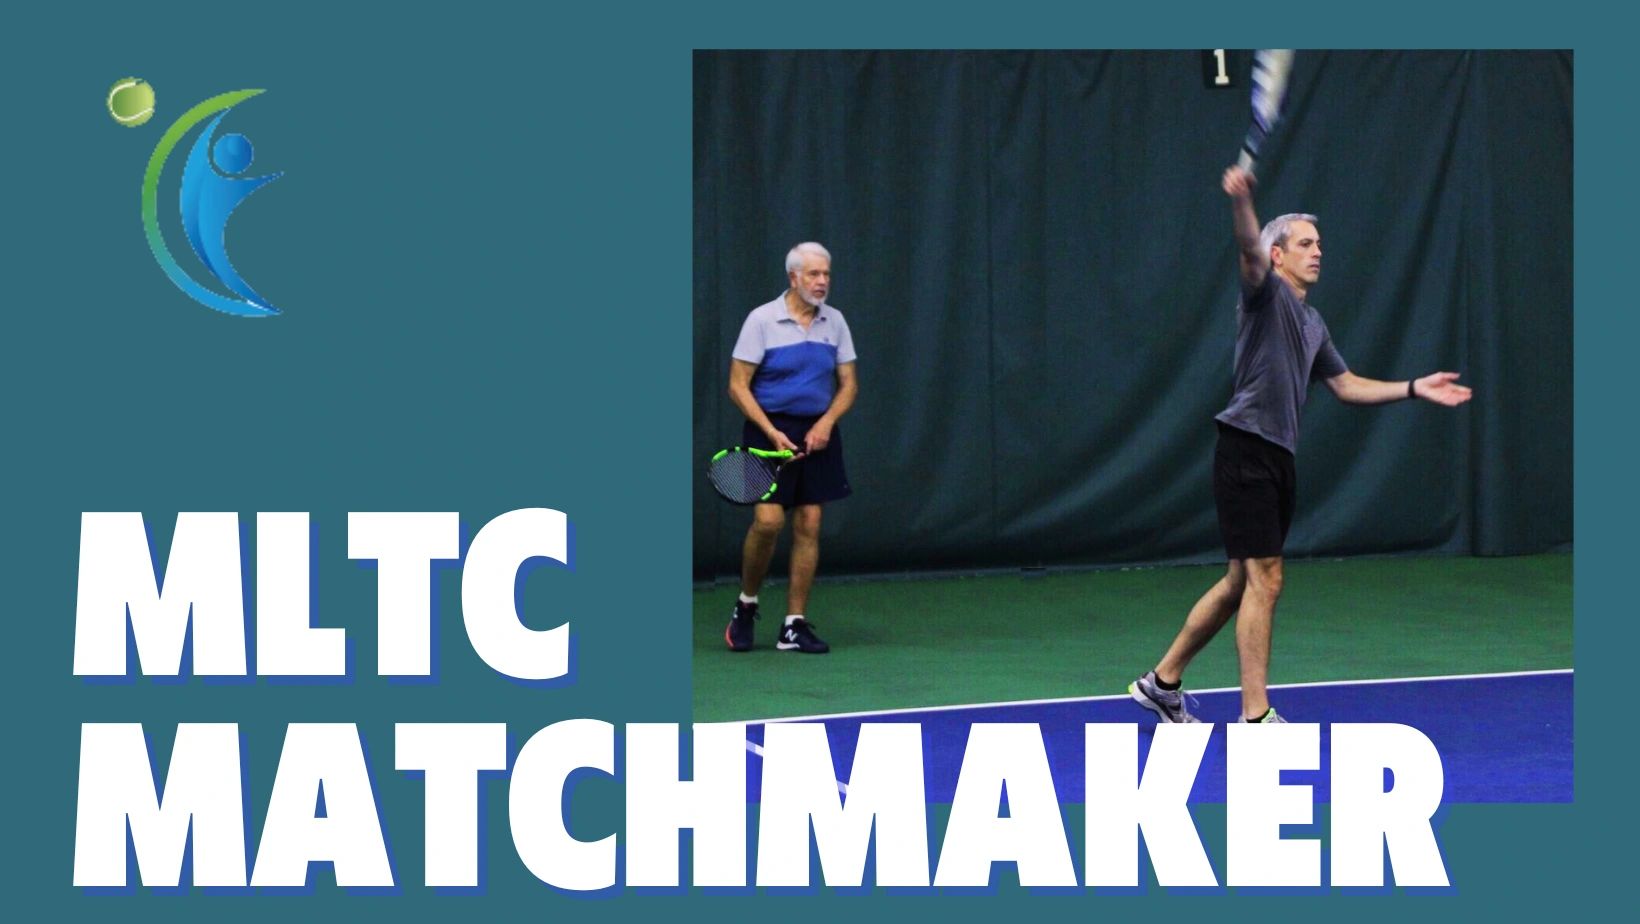 MLTC Matchmaker Program at Marcus Lewis Tennis Center